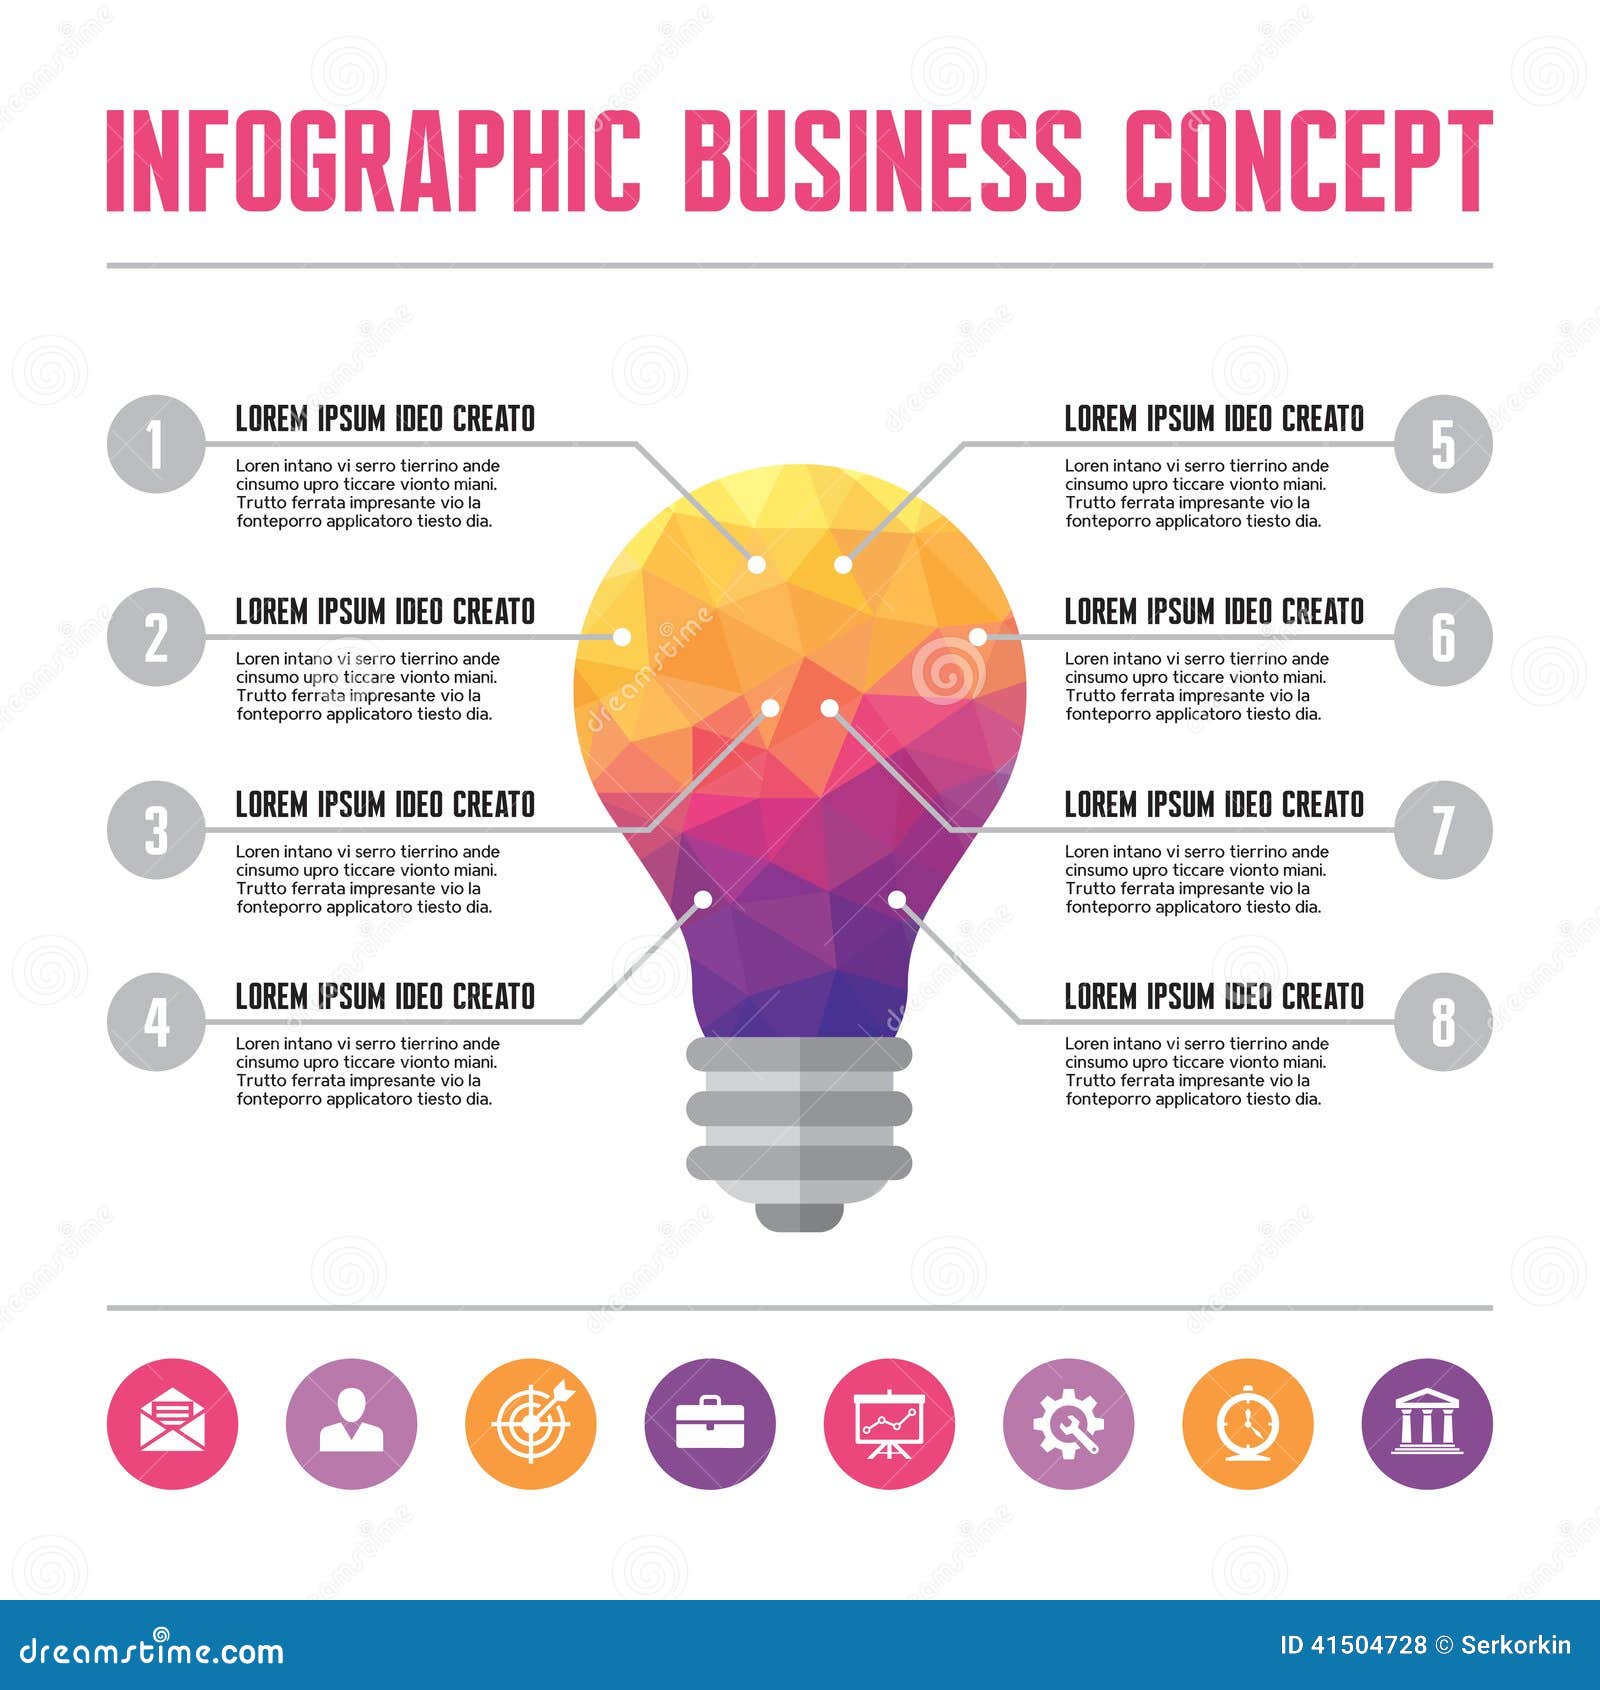 infographic business concept - creative idea illustration